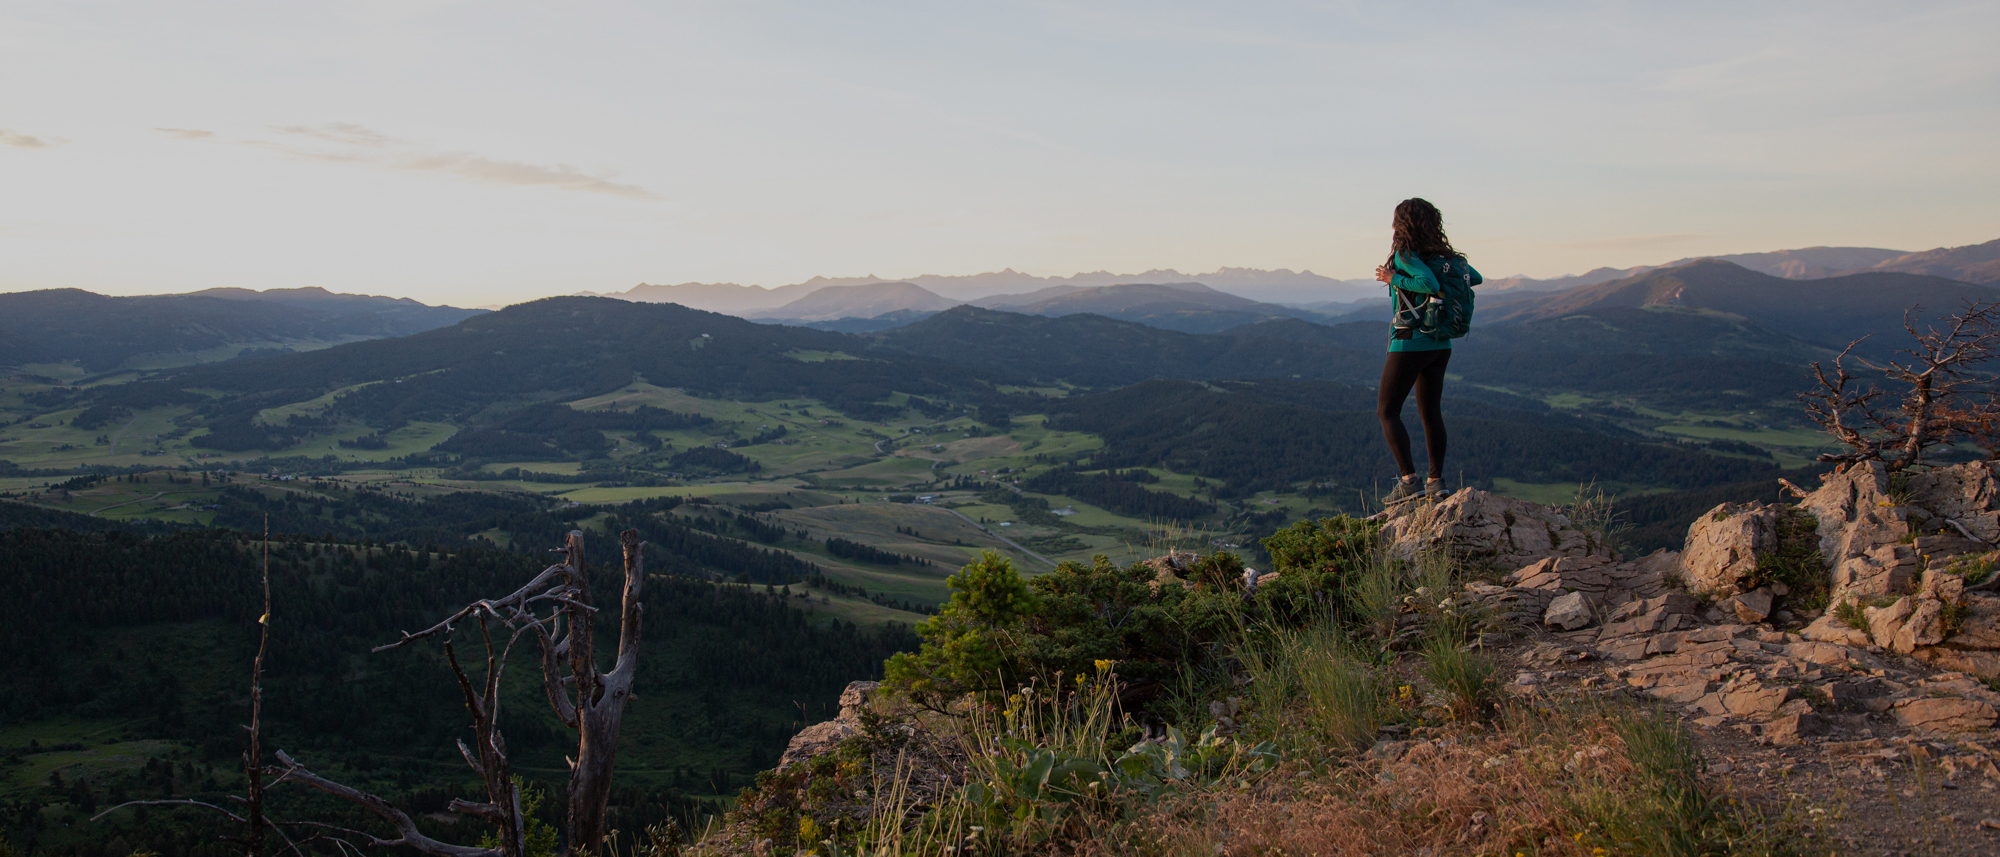 Jackie Nourse overlooking mountain views surrounding Bozeman, MT wearing Oboz hiking boots.